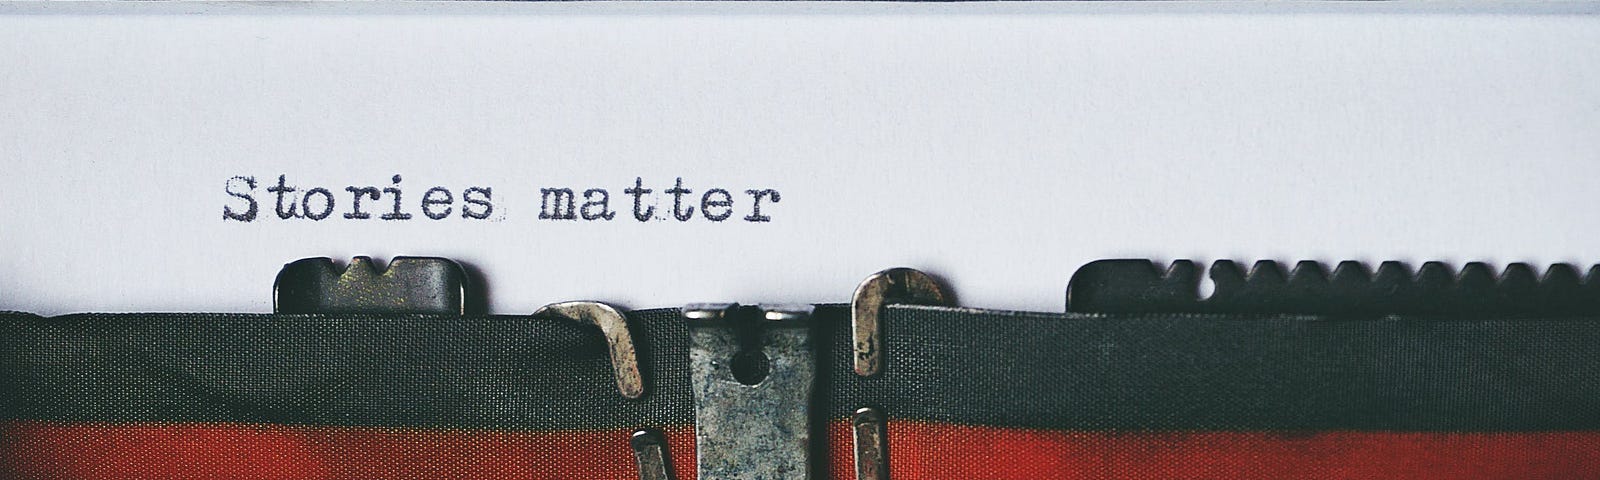 black & red typewriter with “stories matter” written on paper